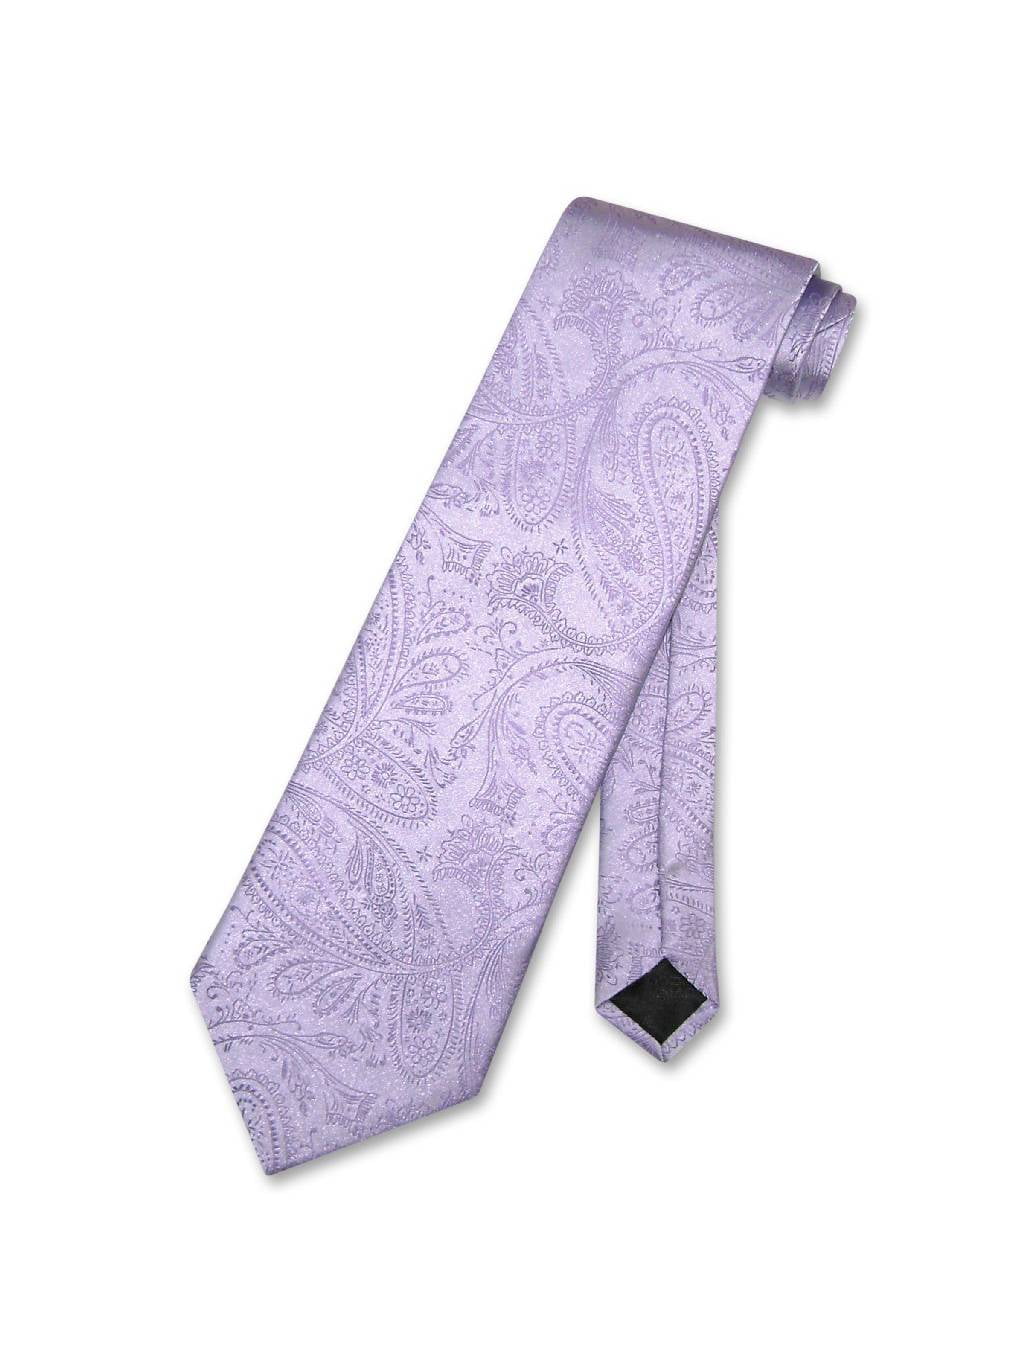 New Vesuvio Napoli polyester Men's necktie & hankie set paisley party ivory 